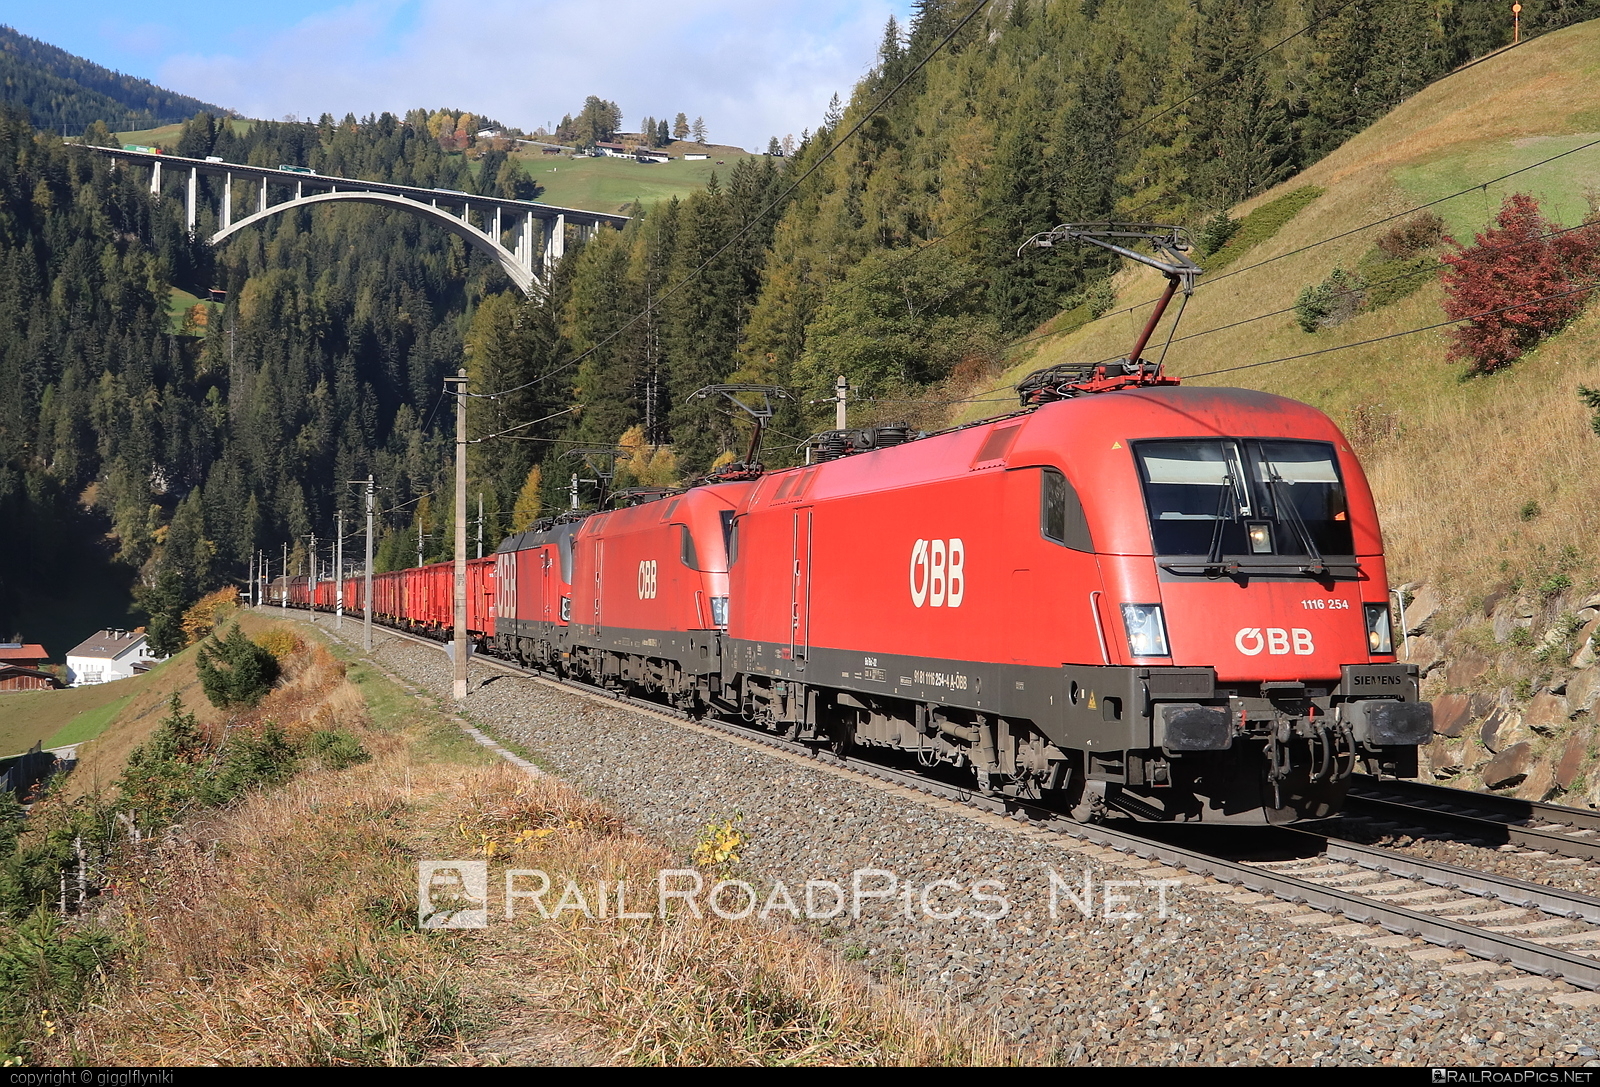 Siemens ES 64 U2 - 1116 254 operated by Rail Cargo Austria AG #es64 #es64u2 #eurosprinter #obb #openwagon #osterreichischebundesbahnen #rcw #siemens #siemensEs64 #siemensEs64u2 #siemenstaurus #taurus #tauruslocomotive